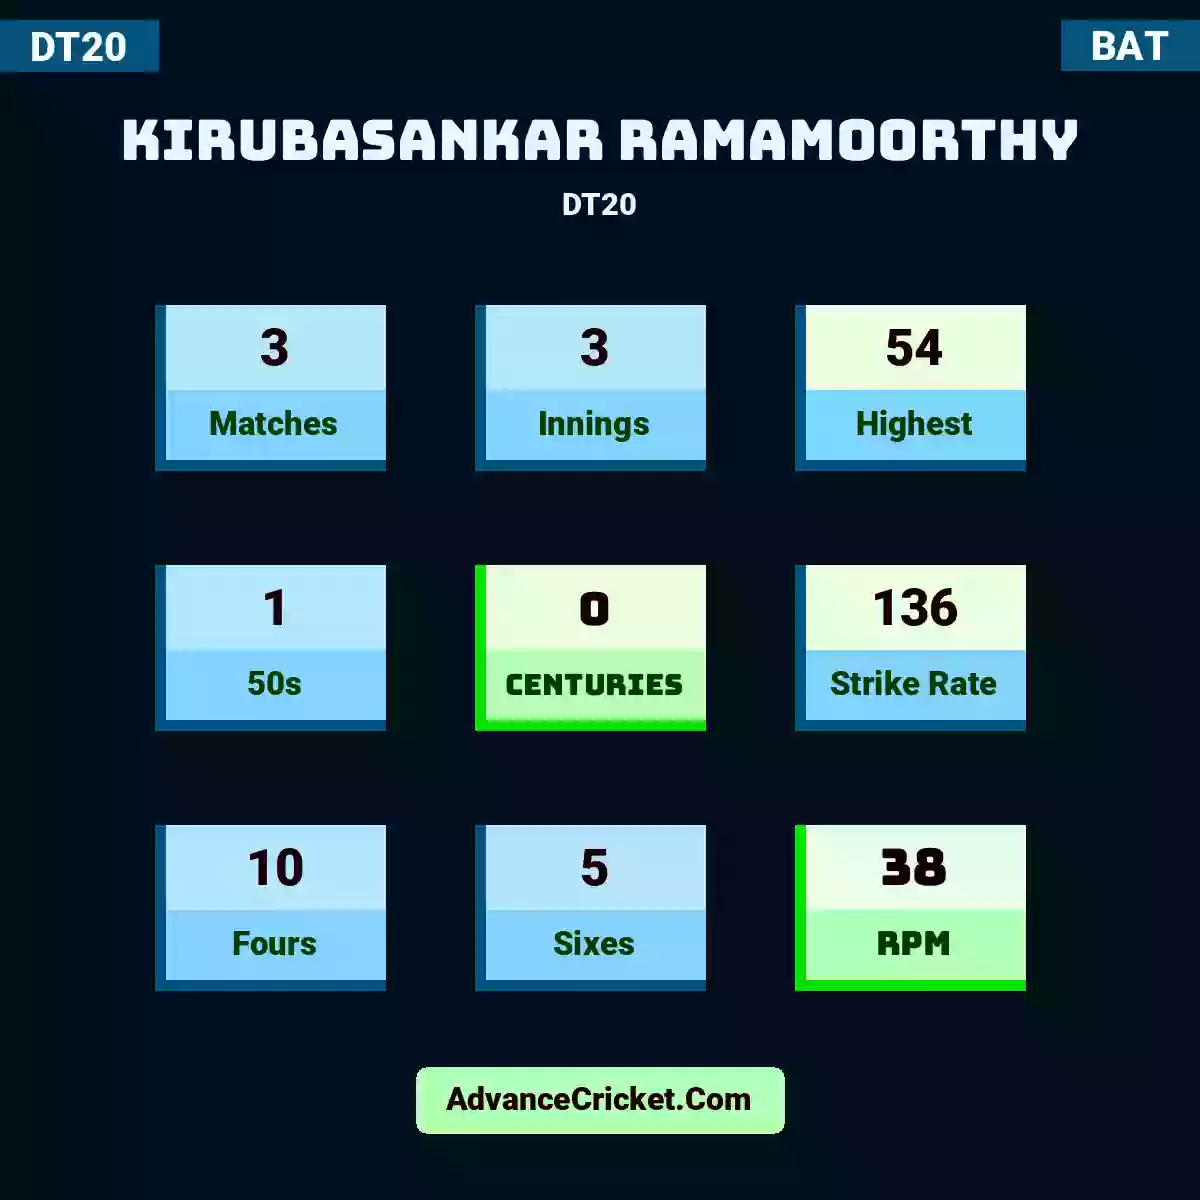 Kirubasankar Ramamoorthy DT20 , Kirubasankar Ramamoorthy played 3 matches, scored 54 runs as highest, 1 half-centuries, and 0 centuries, with a strike rate of 136. K.Ramamoorthy hit 10 fours and 5 sixes, with an RPM of 38.